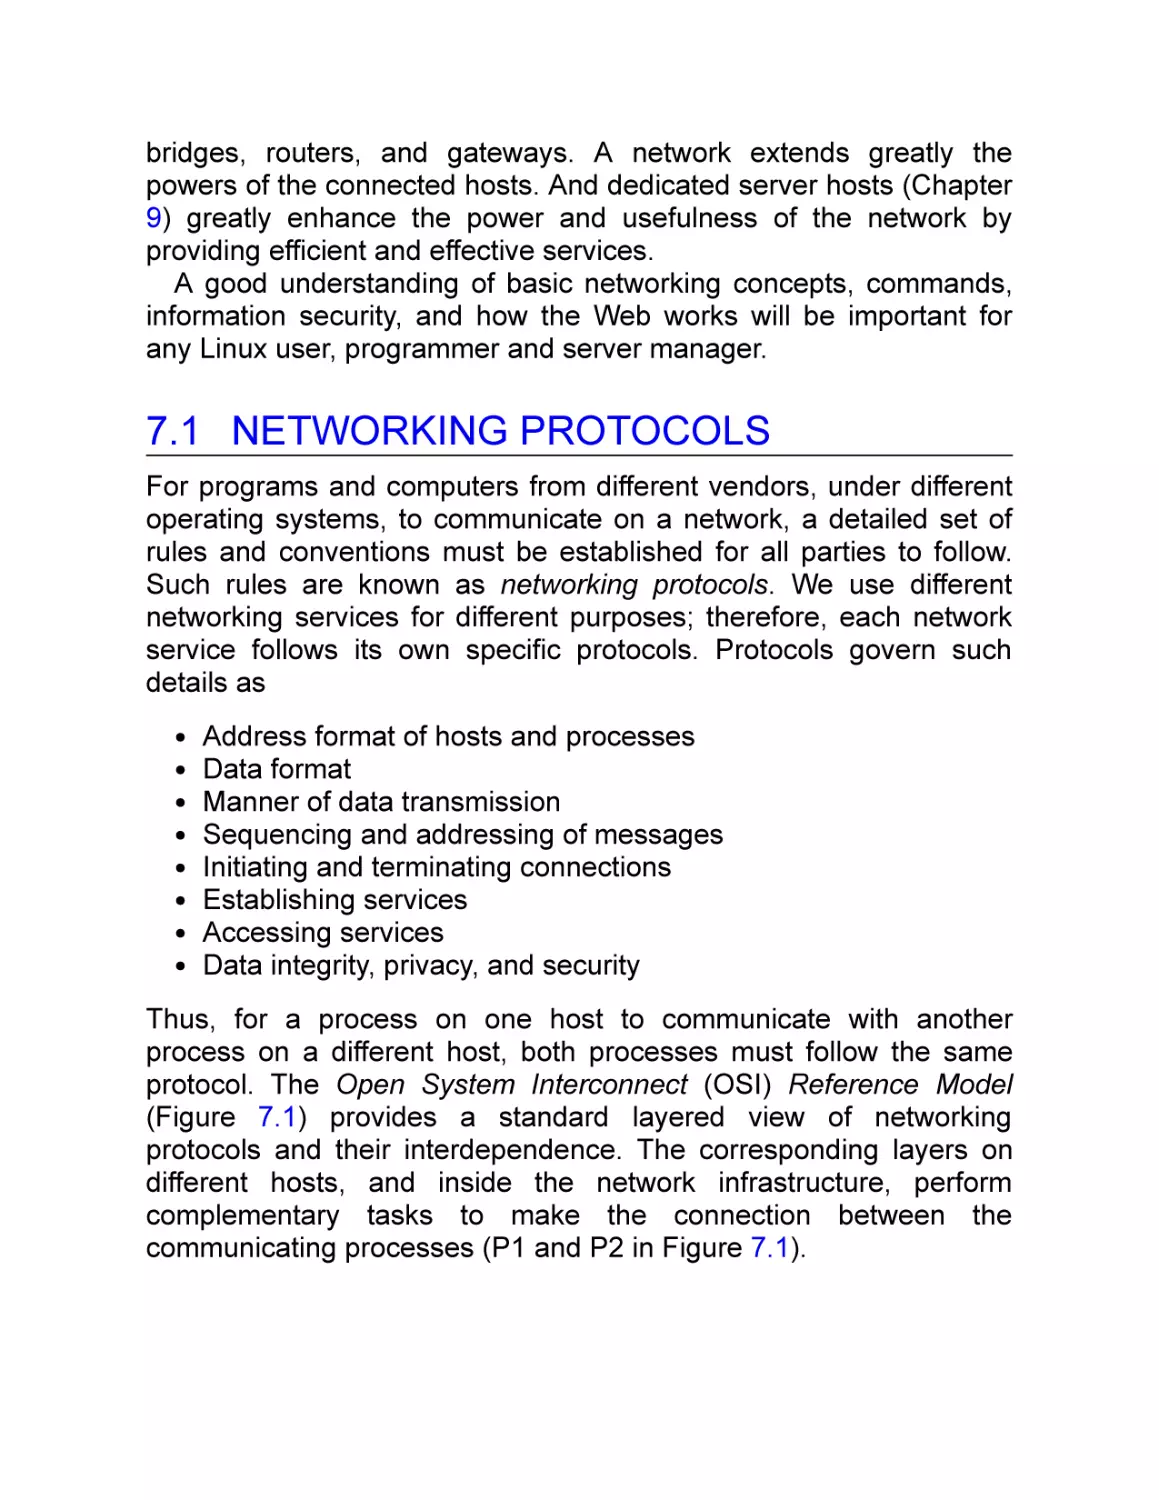 7.1 Networking Protocols